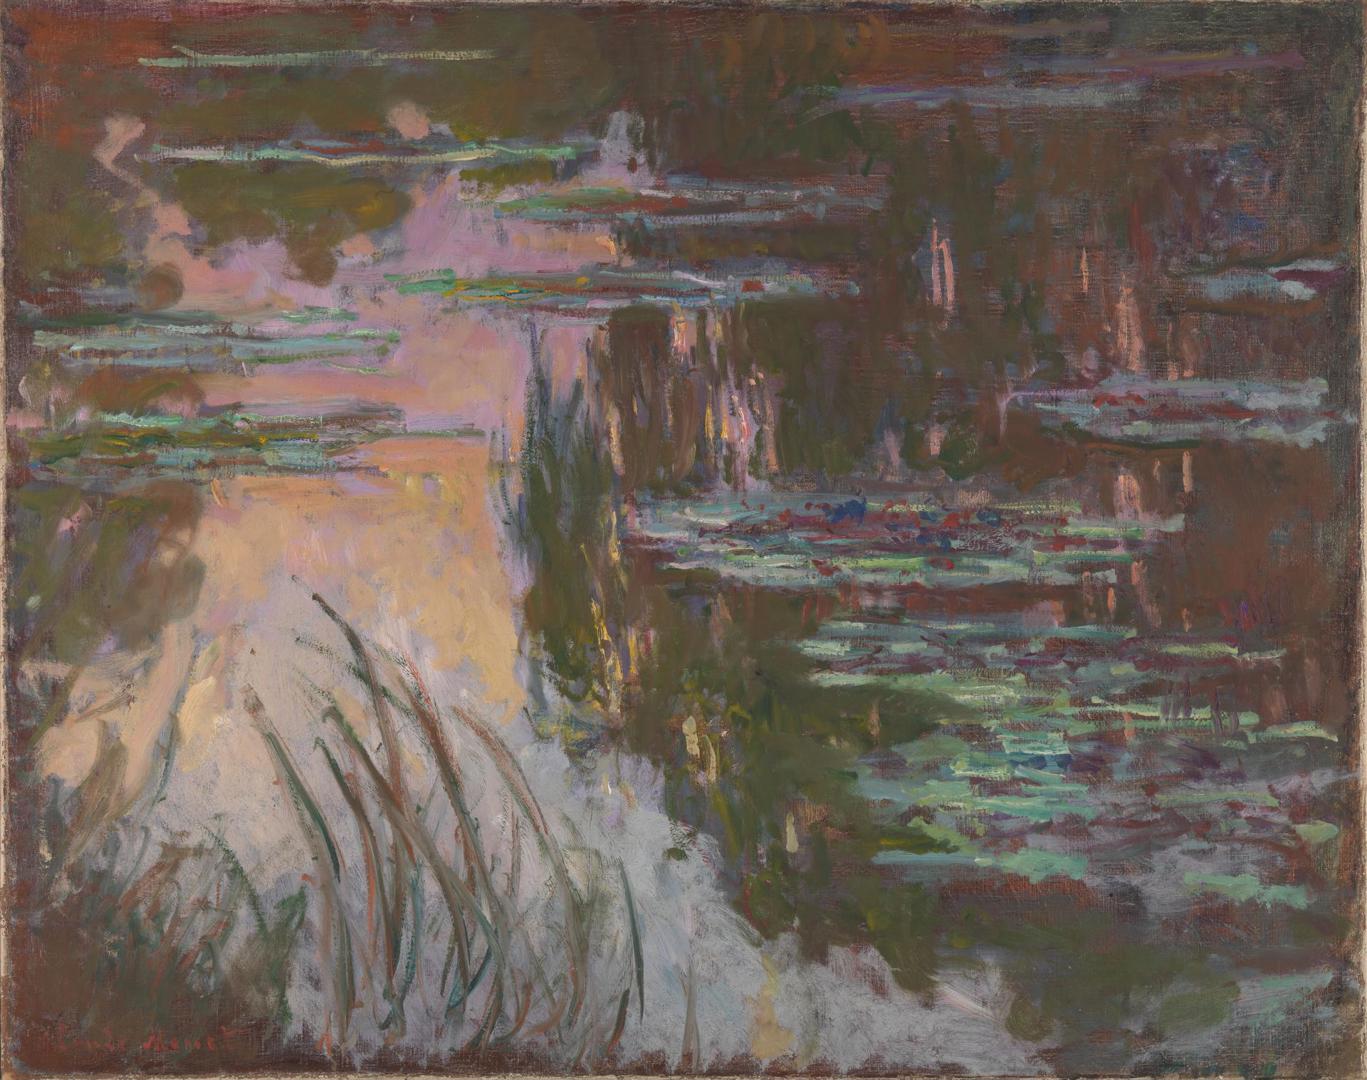 Water-Lilies, Setting Sun by Claude Monet